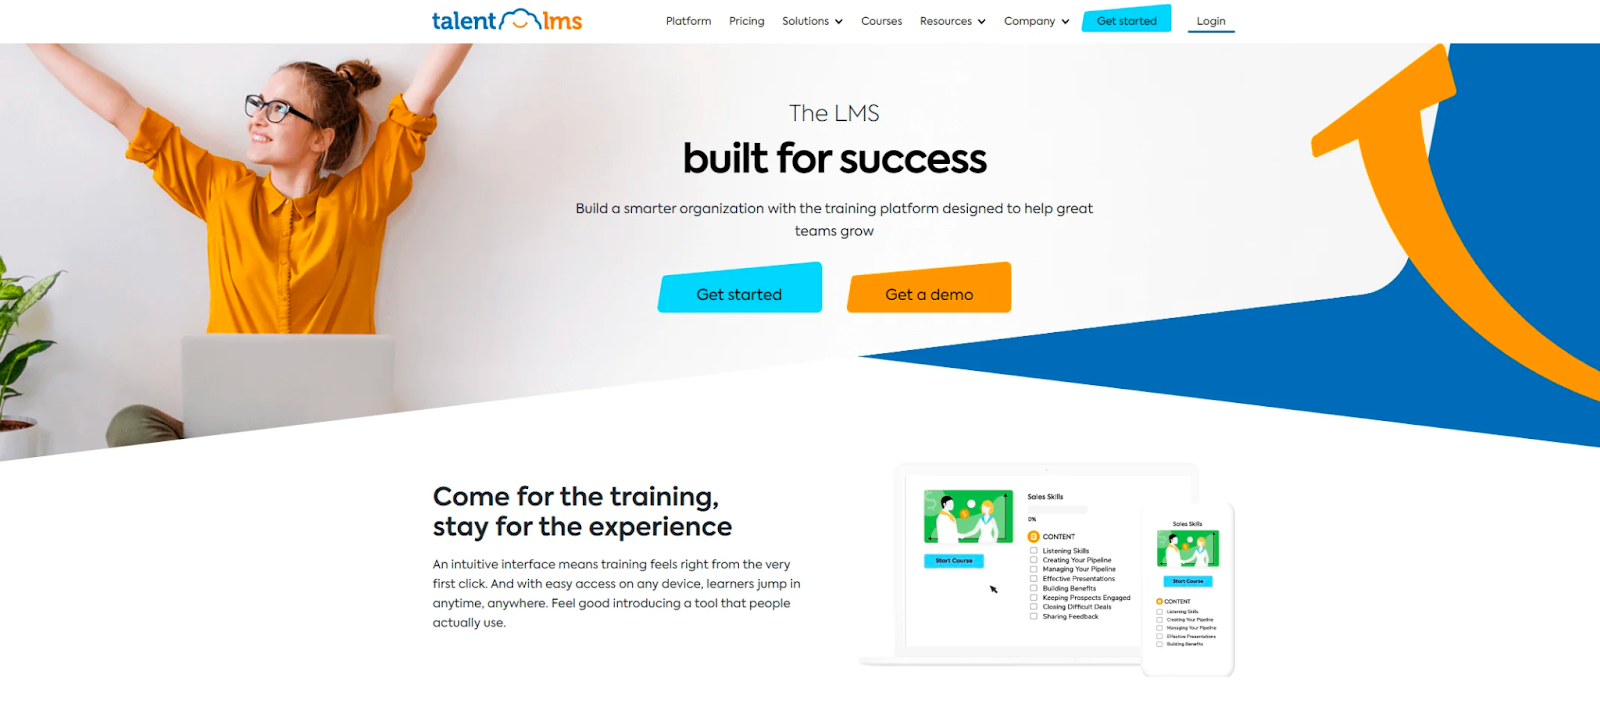 TalentLMS Website Banner